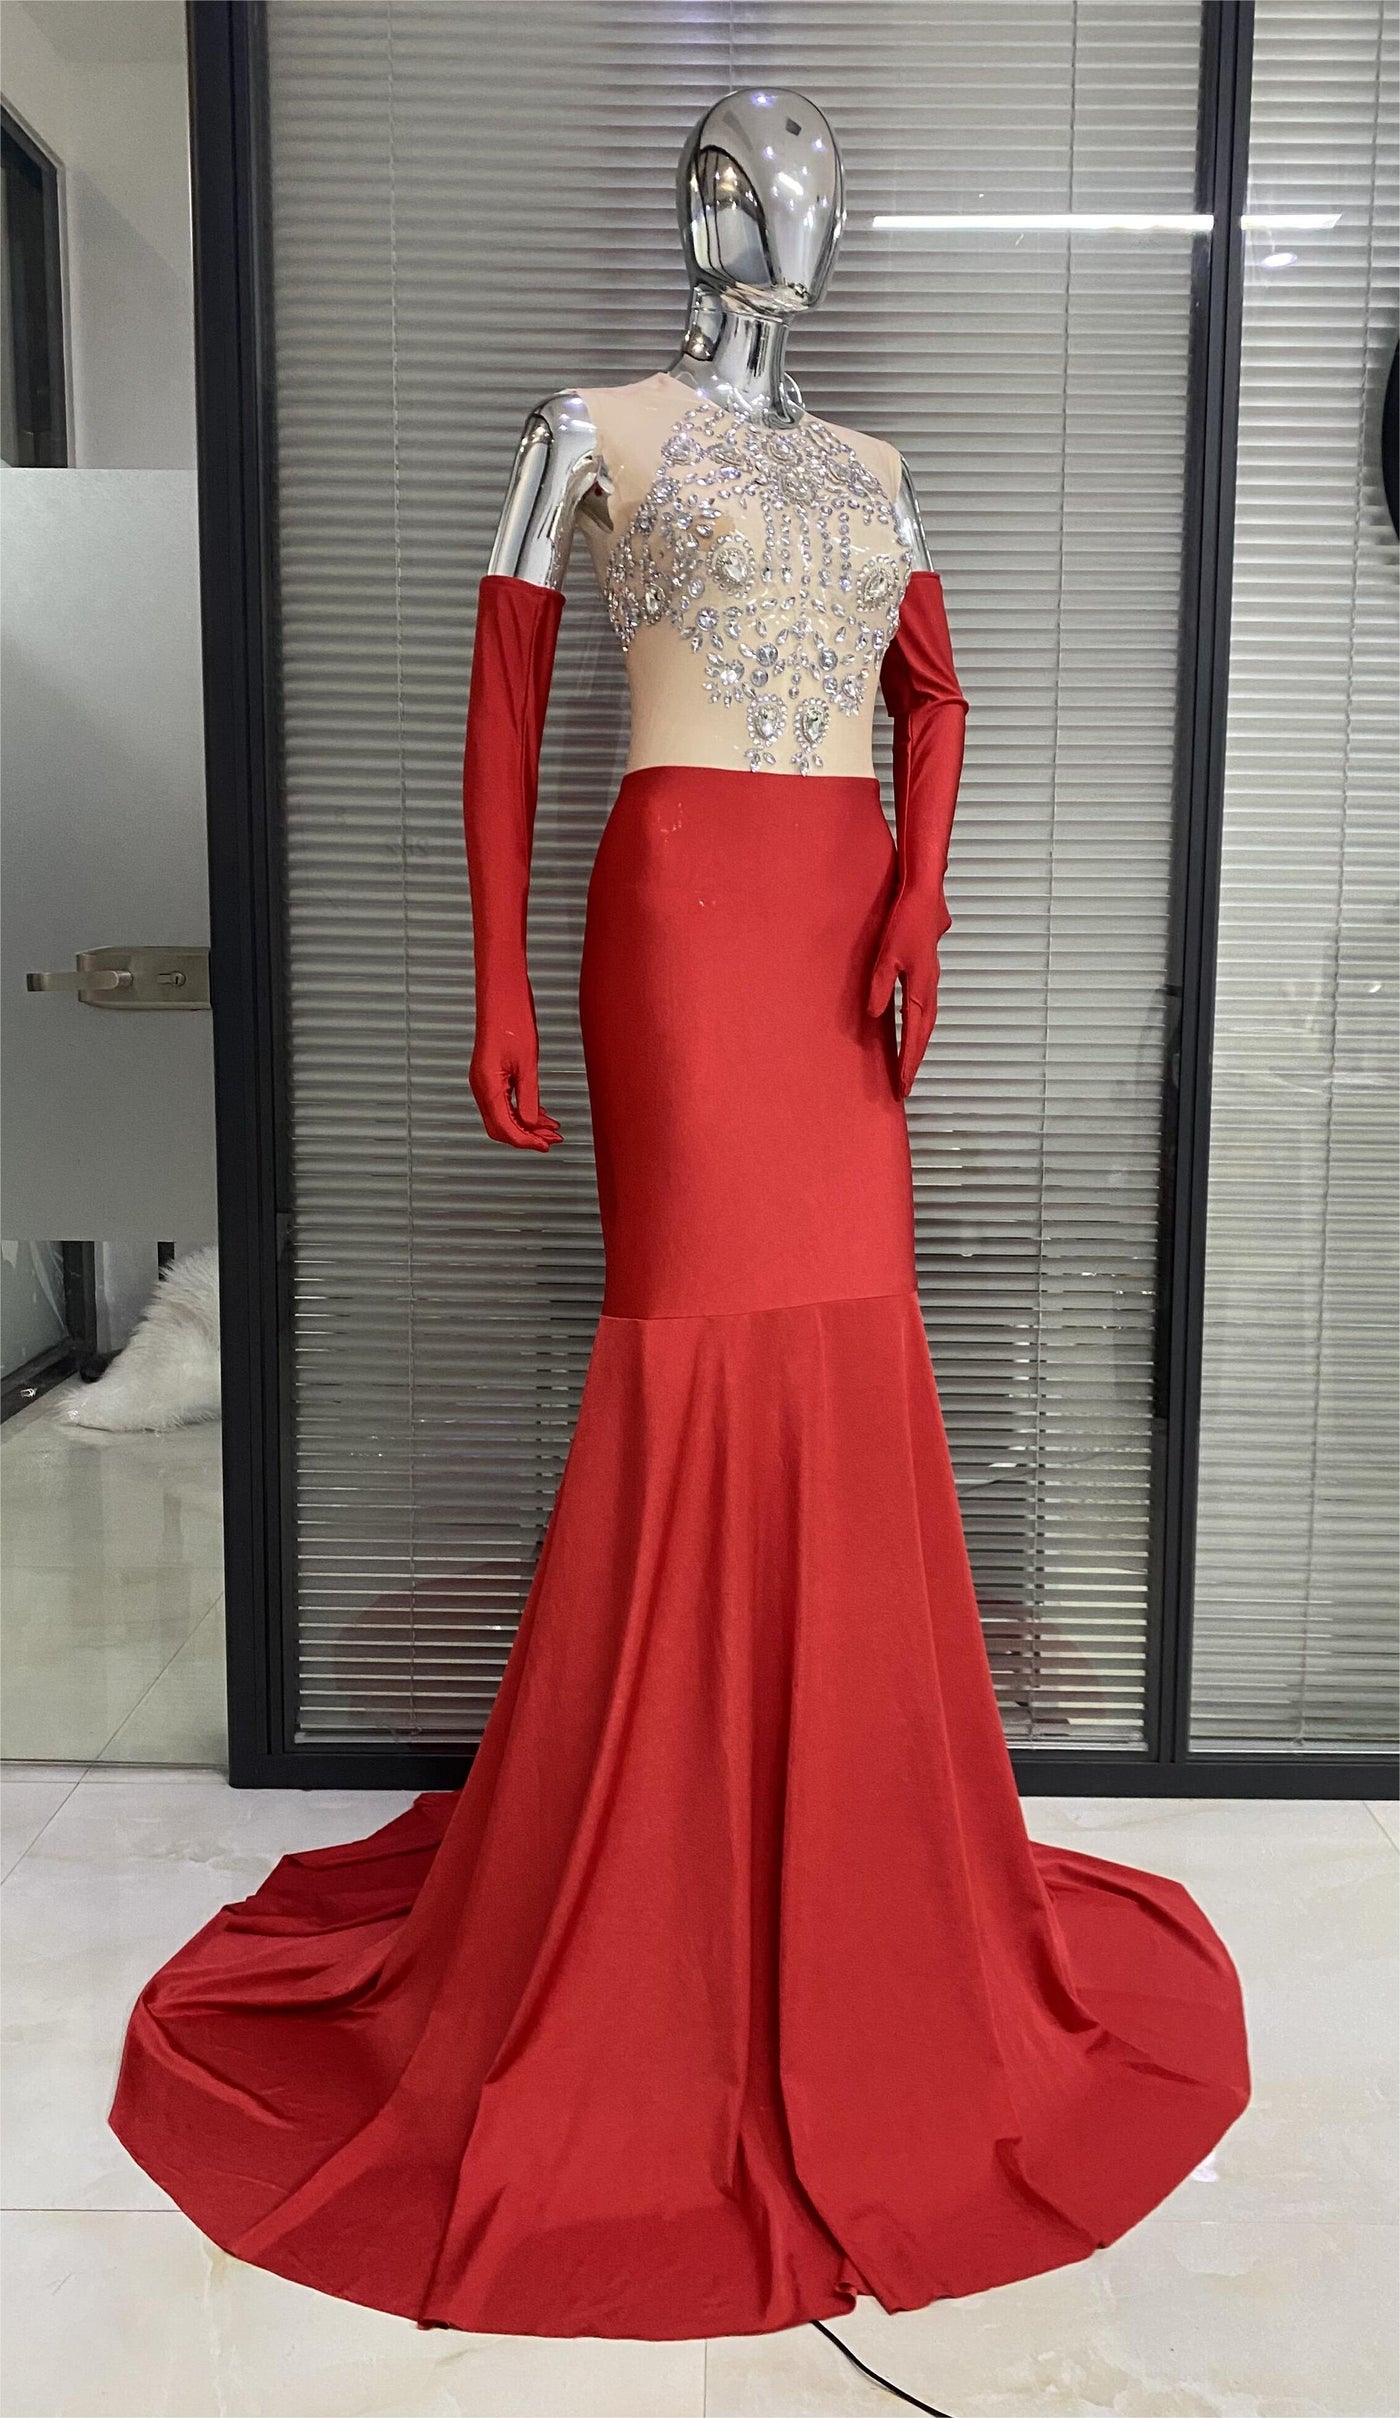 Spandex Gown With Over-size Rhinestone Diamond Embellishment